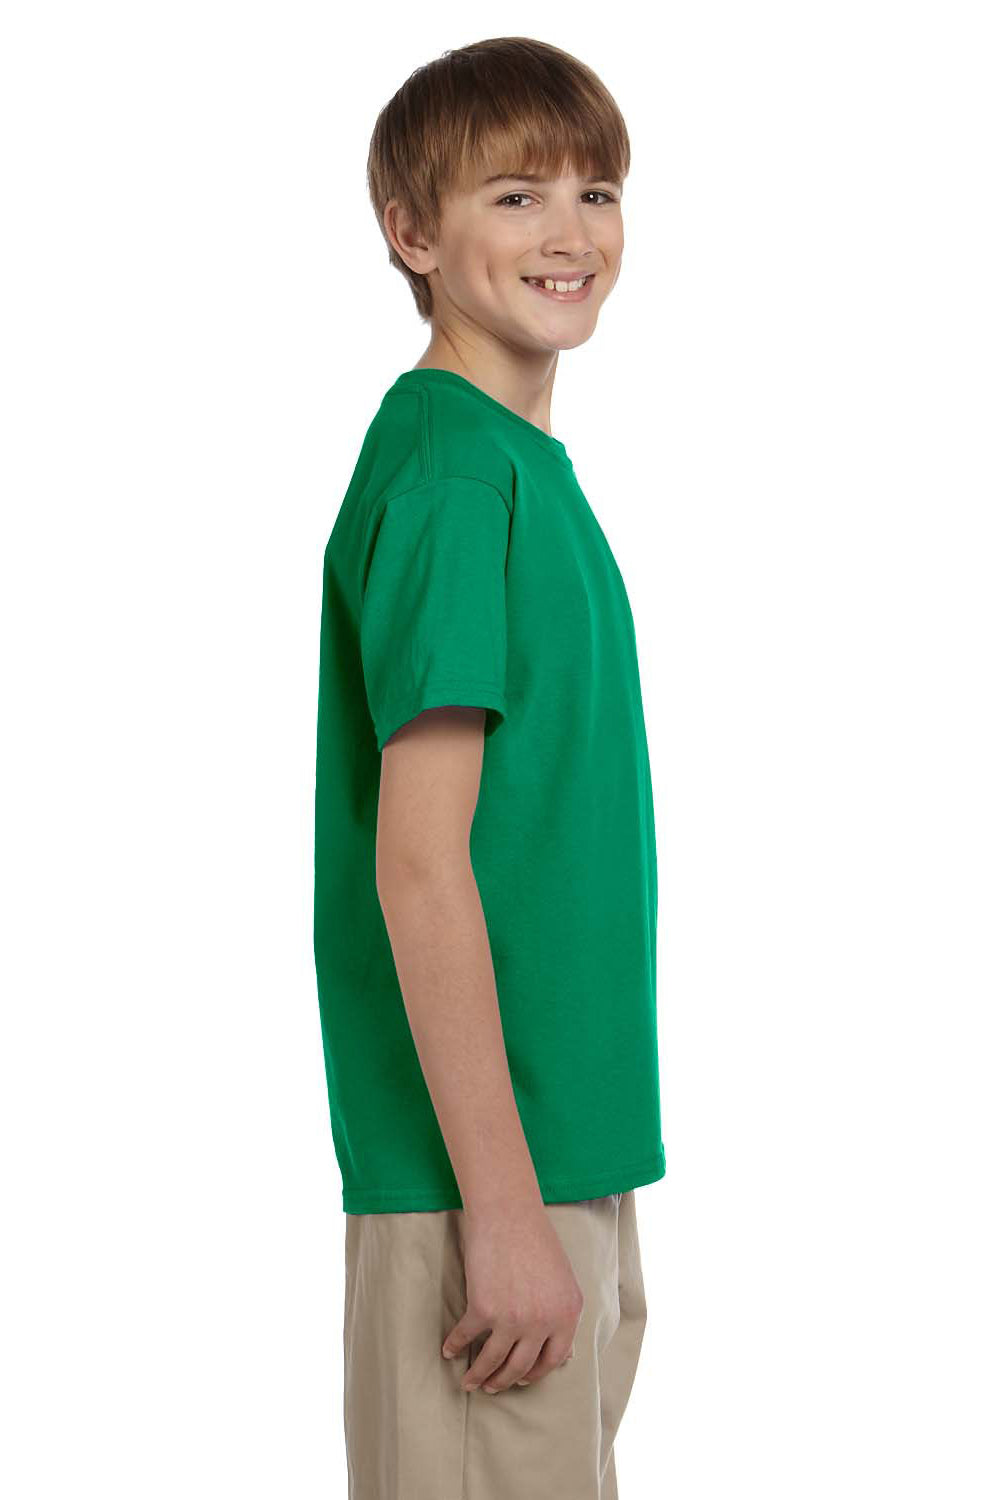 Gildan G200B Youth Ultra Short Sleeve Crewneck T-Shirt Kelly Green Side